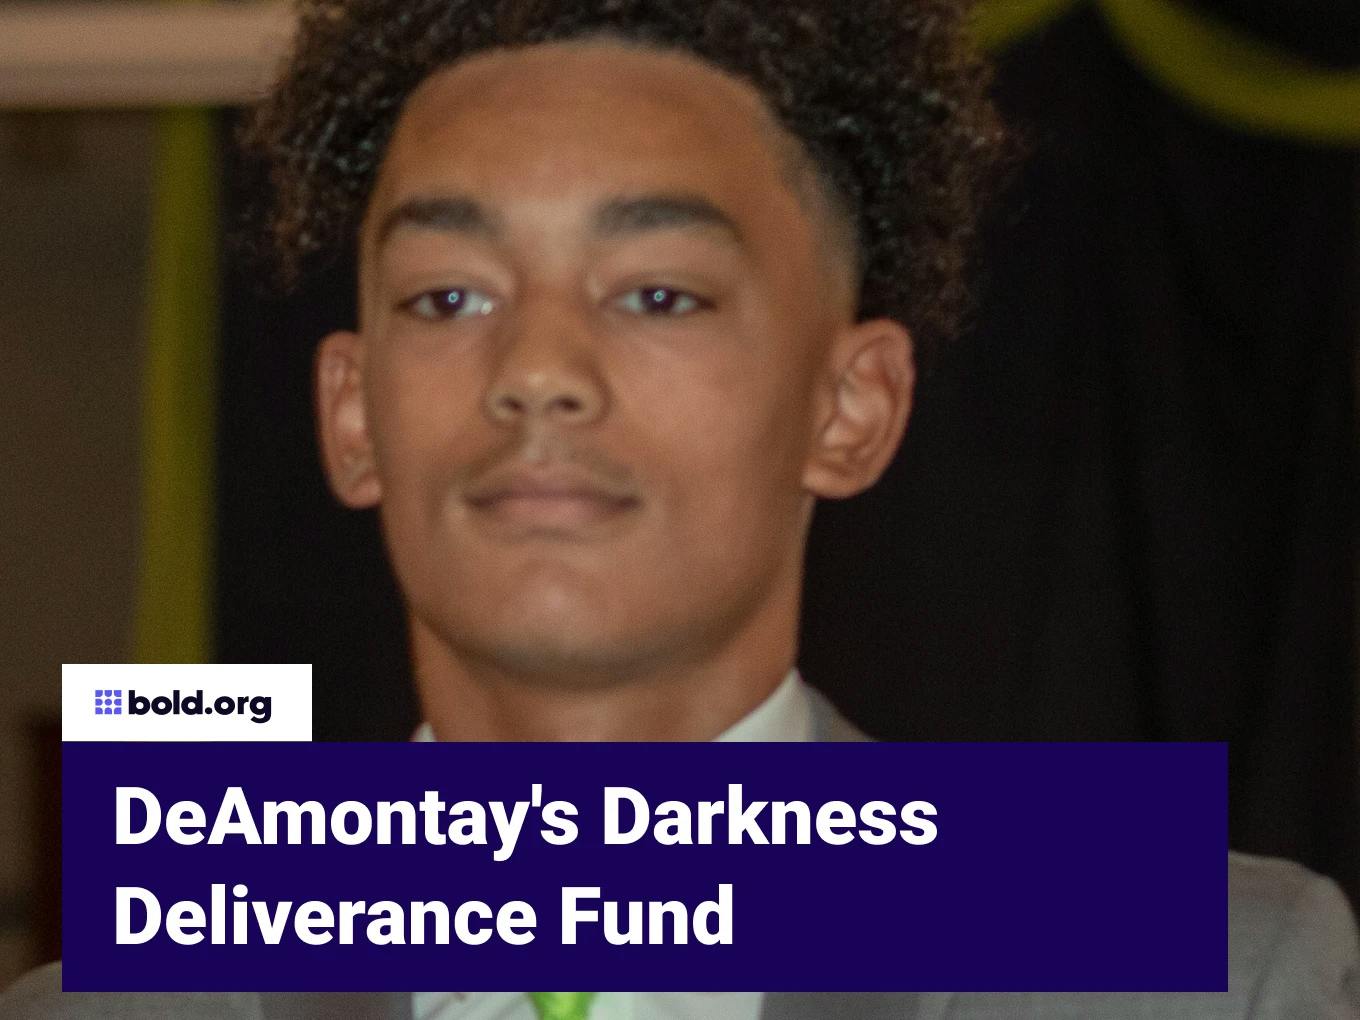 DeAmontay's Memorial Scholarship Fund